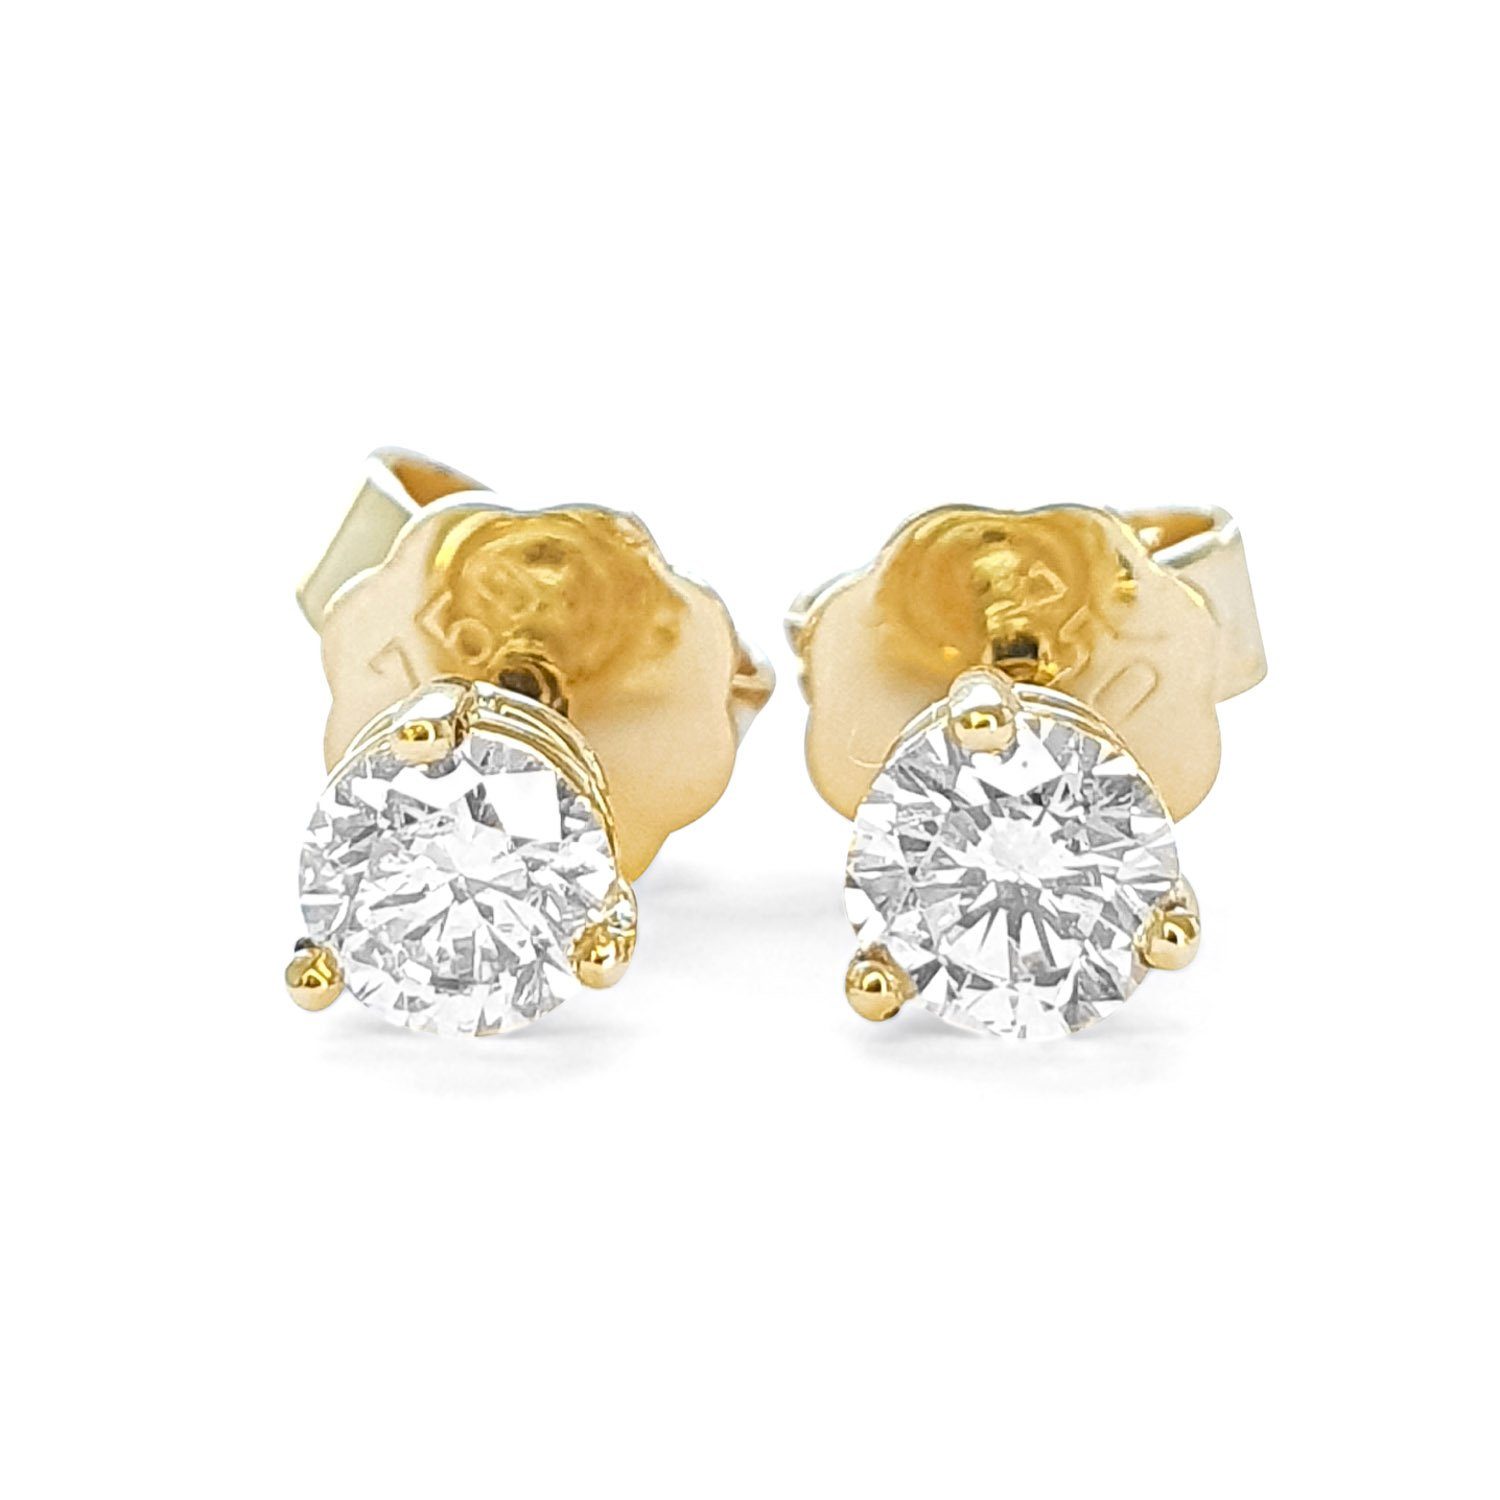 Webgoldschmied Paar Ohrstecker Damen Ohrstecker 750 Gold mit 2 Diamanten Brillanten 0,51 F/IF, handgearbeitet